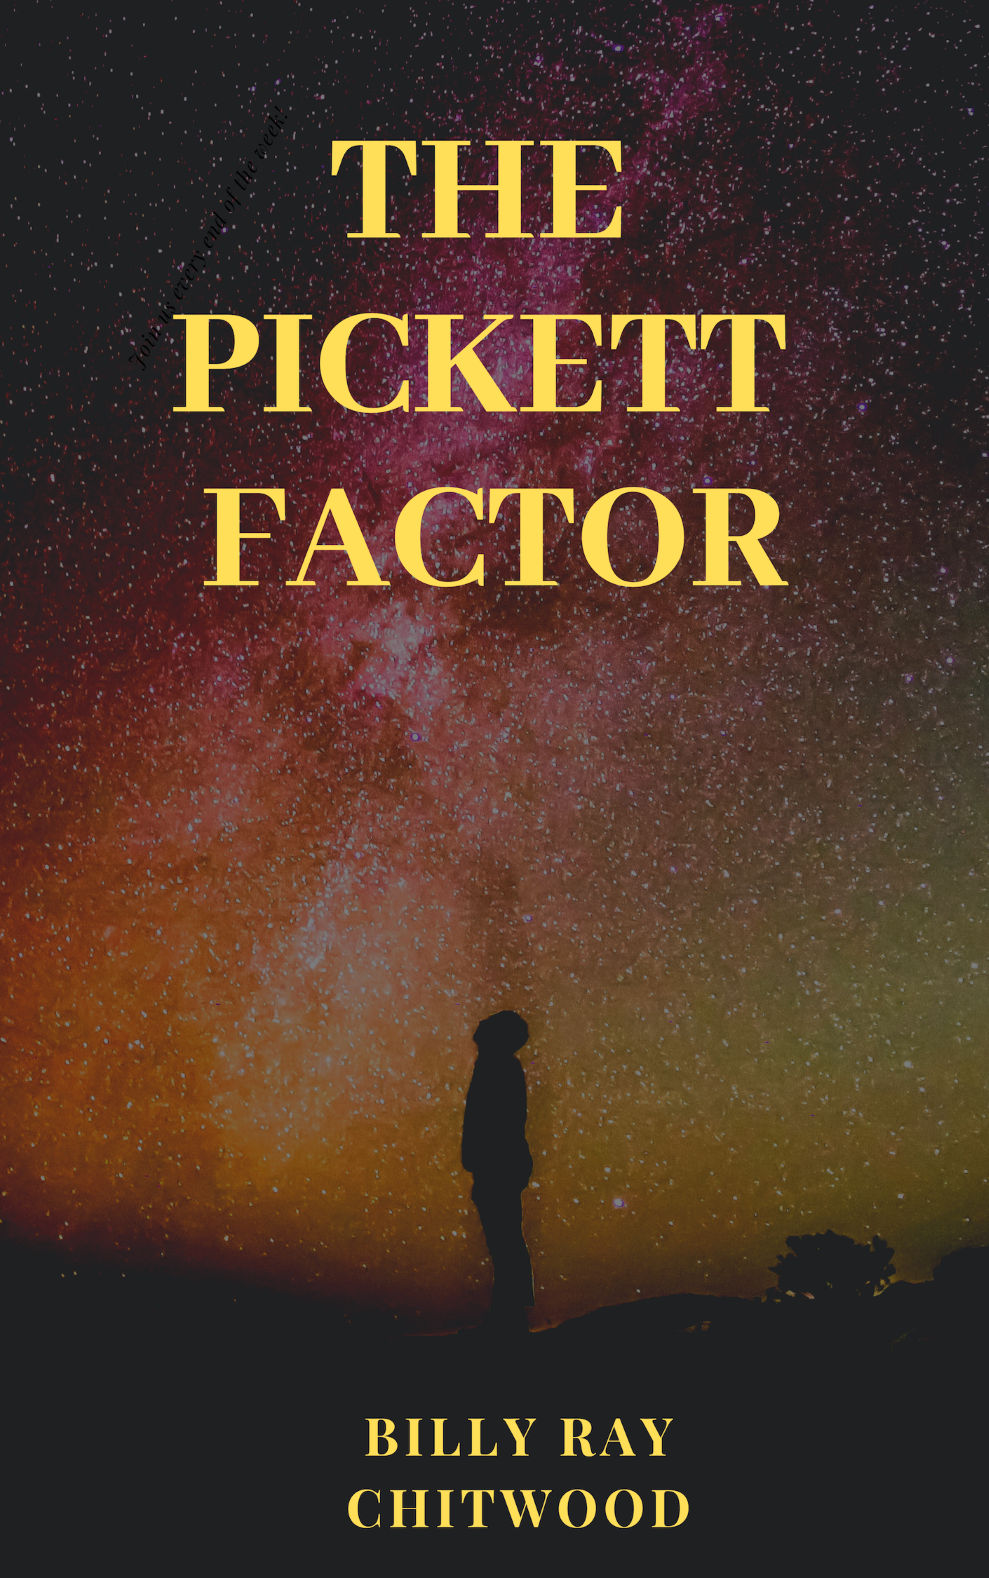 “The Pickett Factor” – NEW NOVEL